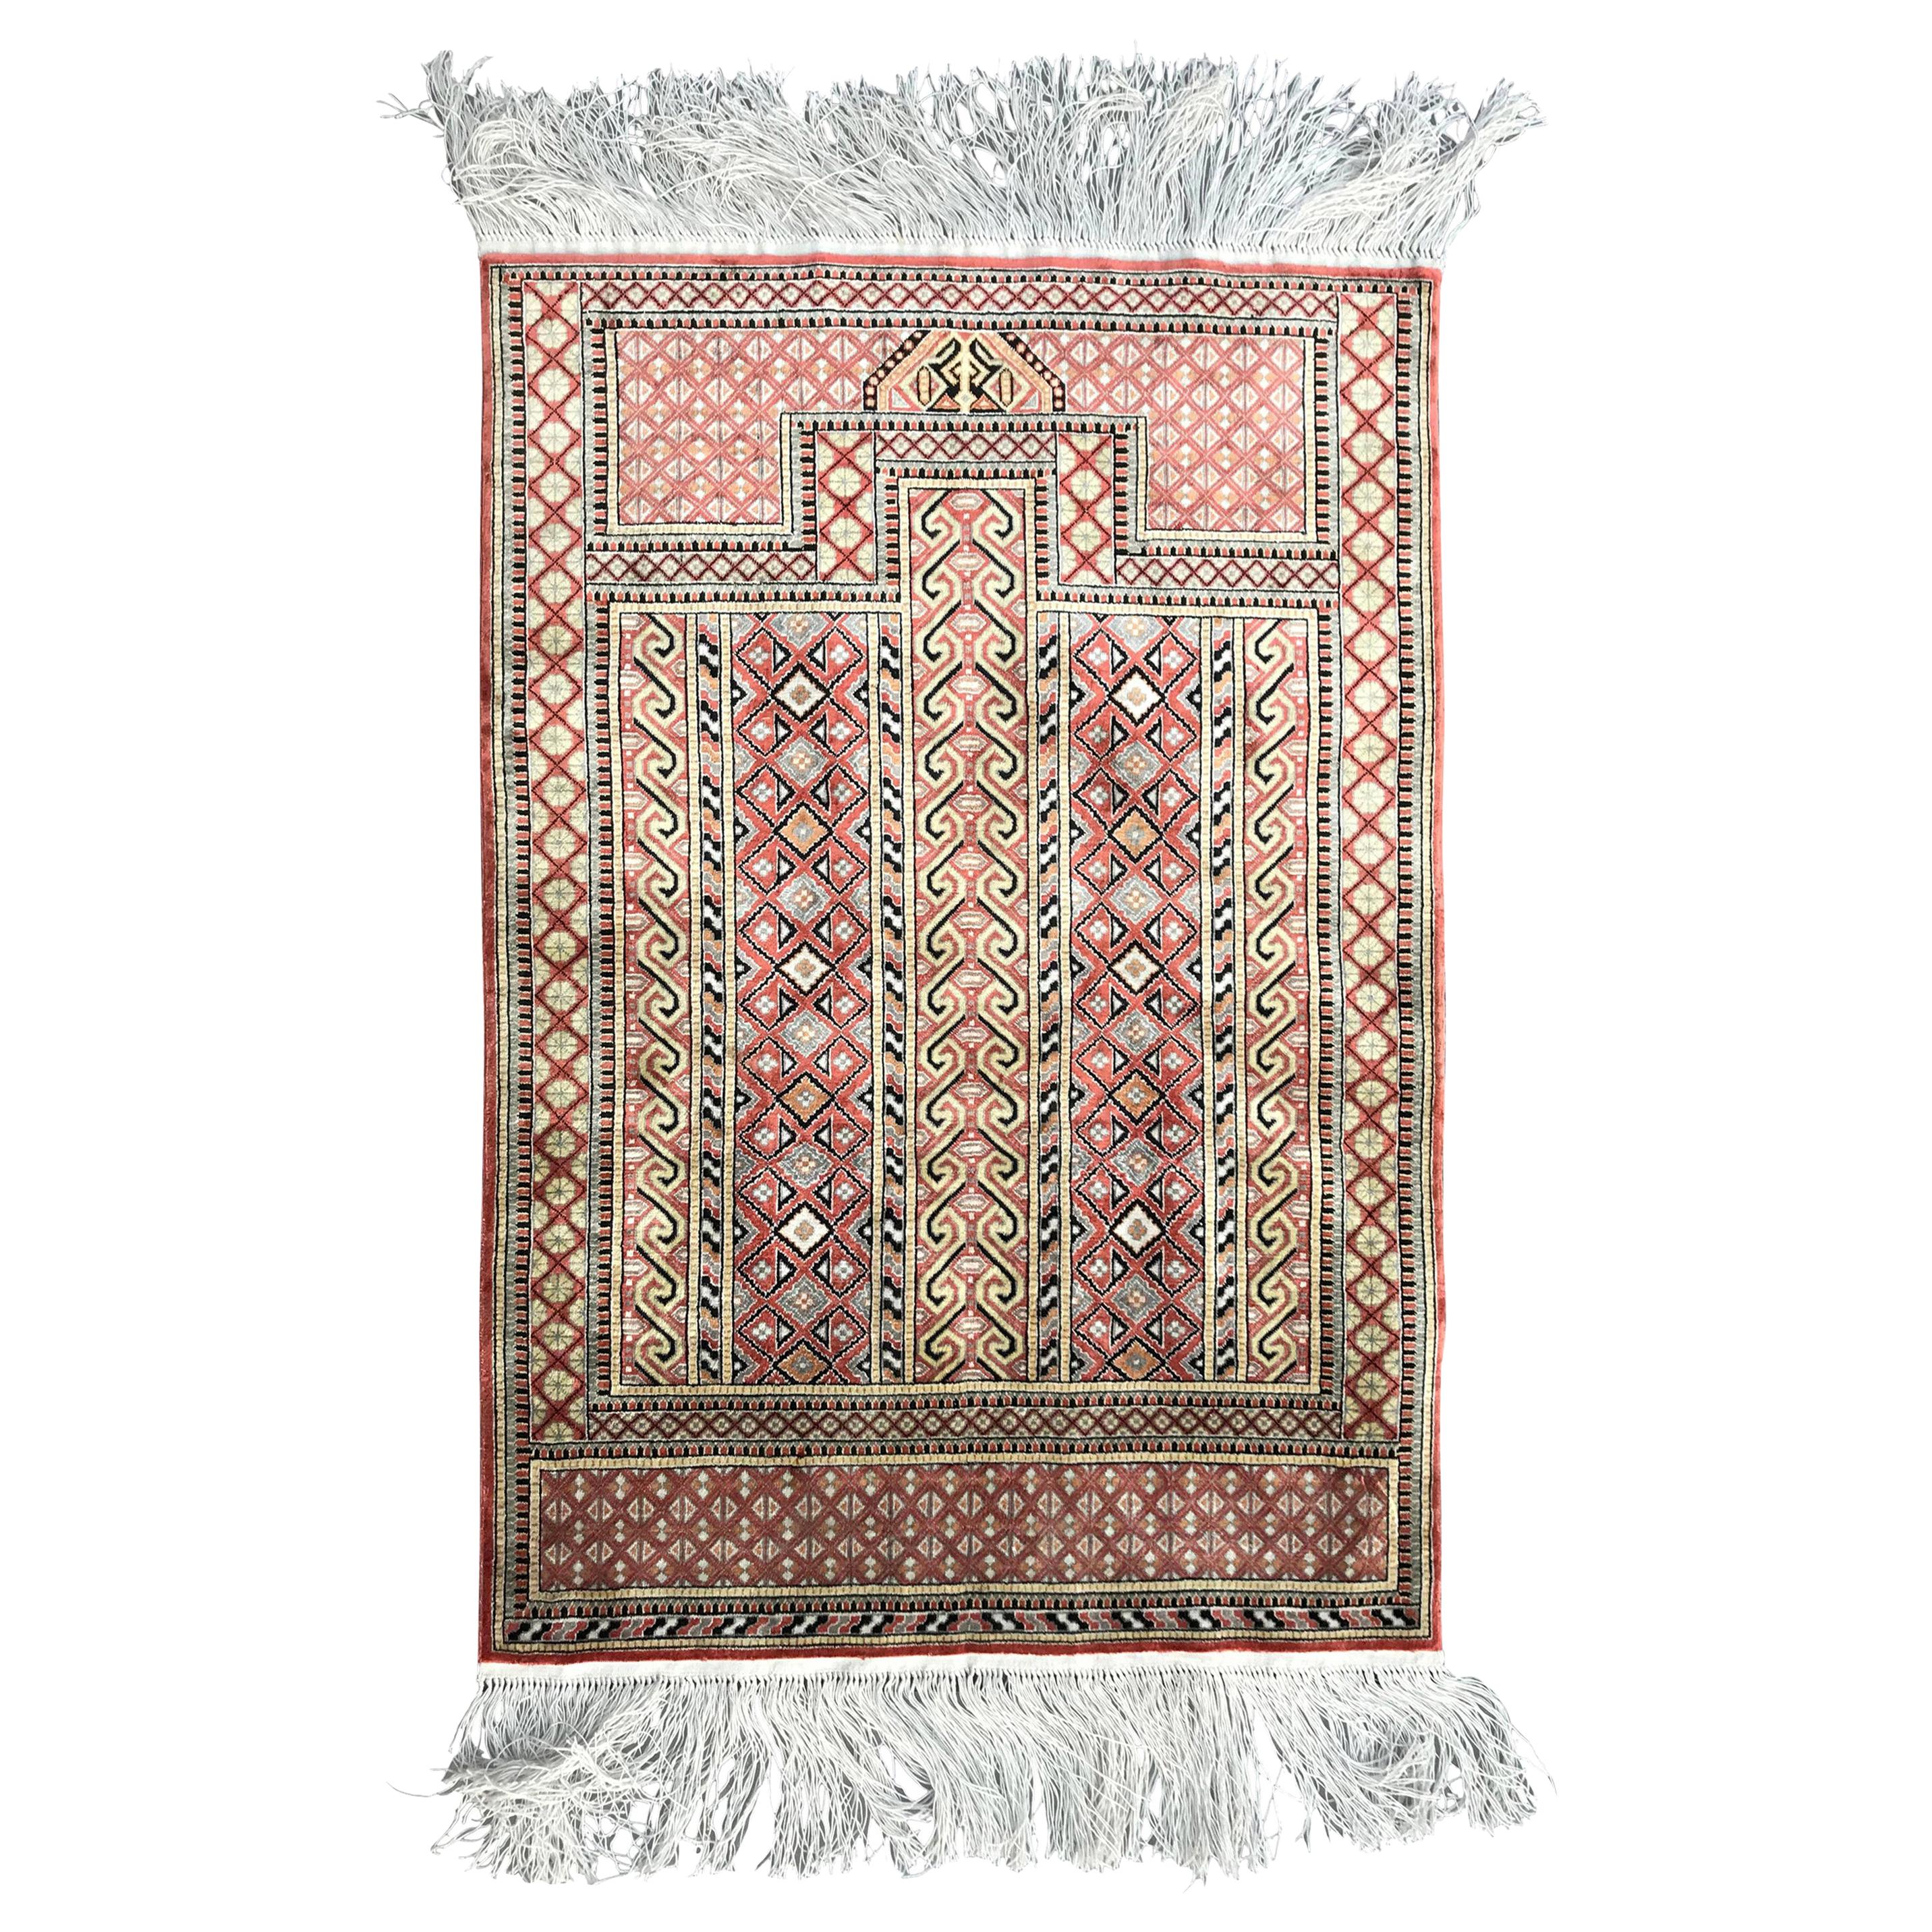 Très beau tapis de Turquie en soie de style Hereke